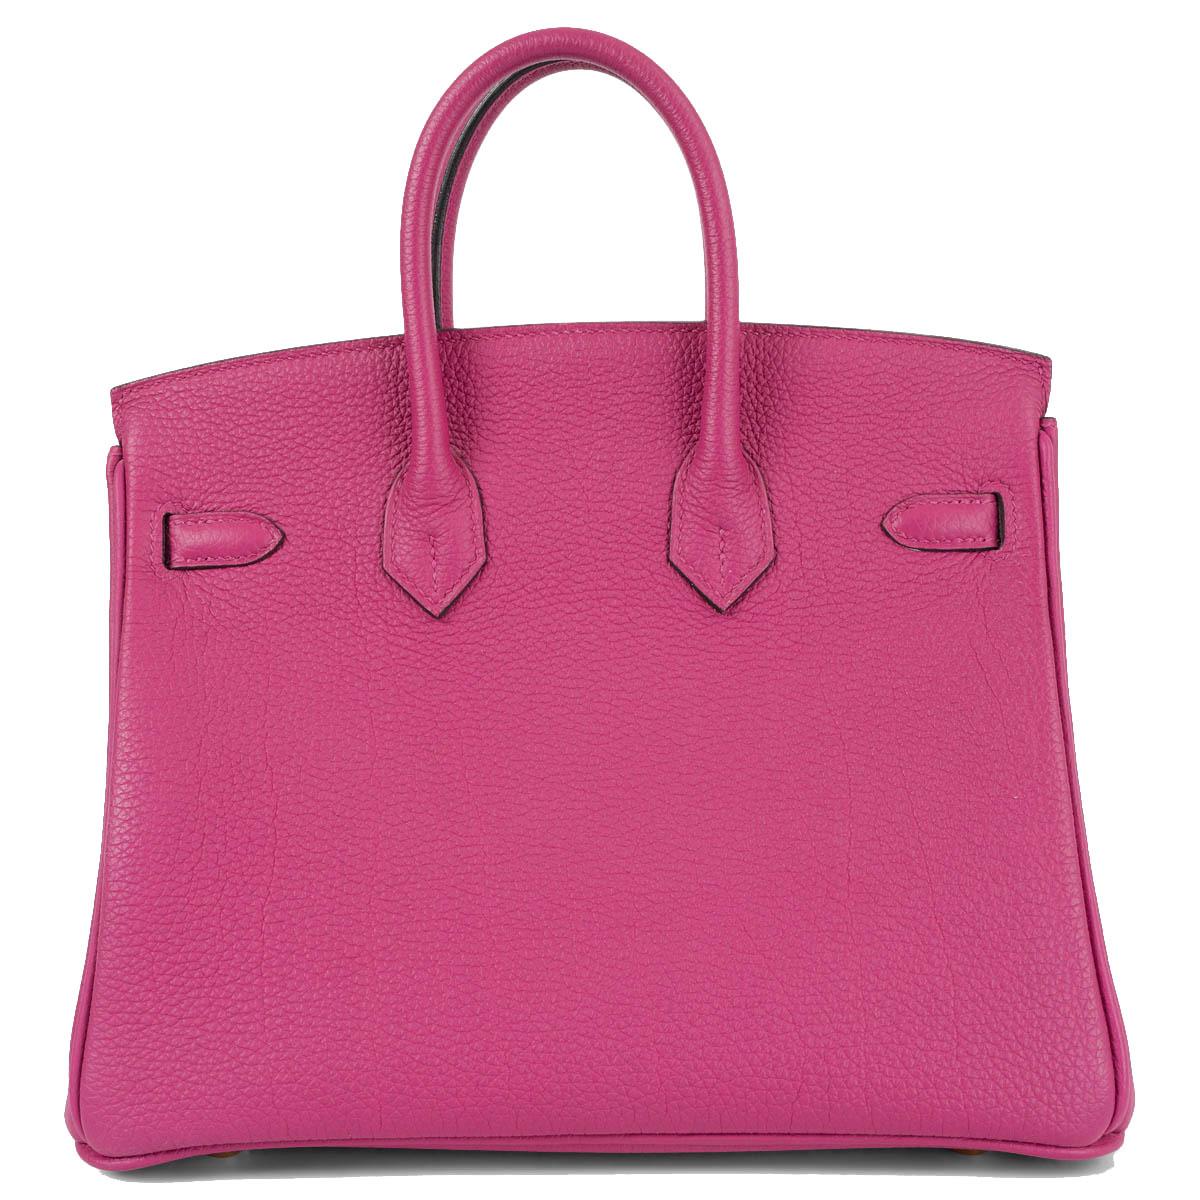 Women's HERMES Rose Pourpre pink Togo leather BIRKIN 25 Bag w Gold